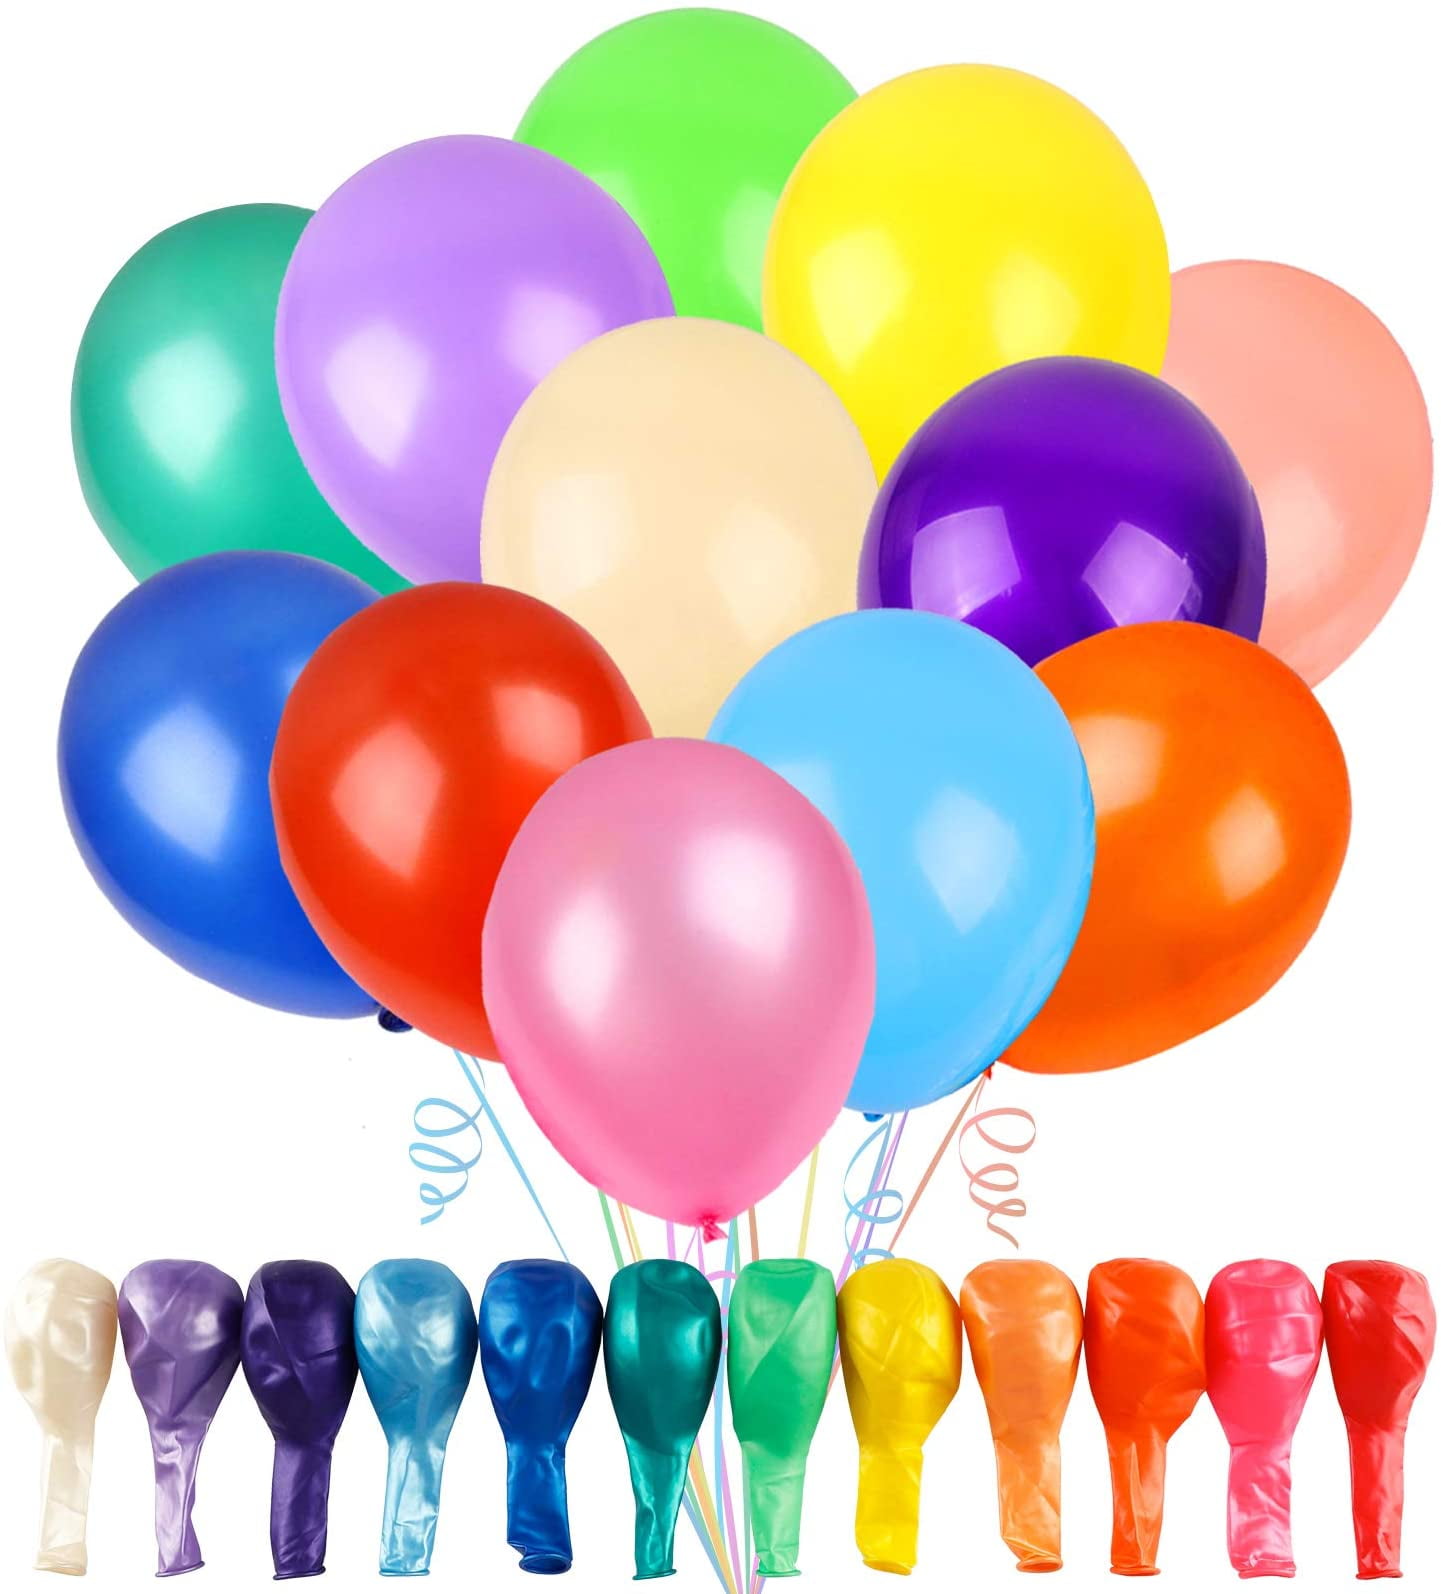 KIDS BIRTHDAY PARTY BALLOONS Bright Colourful Unicorn Flamingo Helium Air Fill 